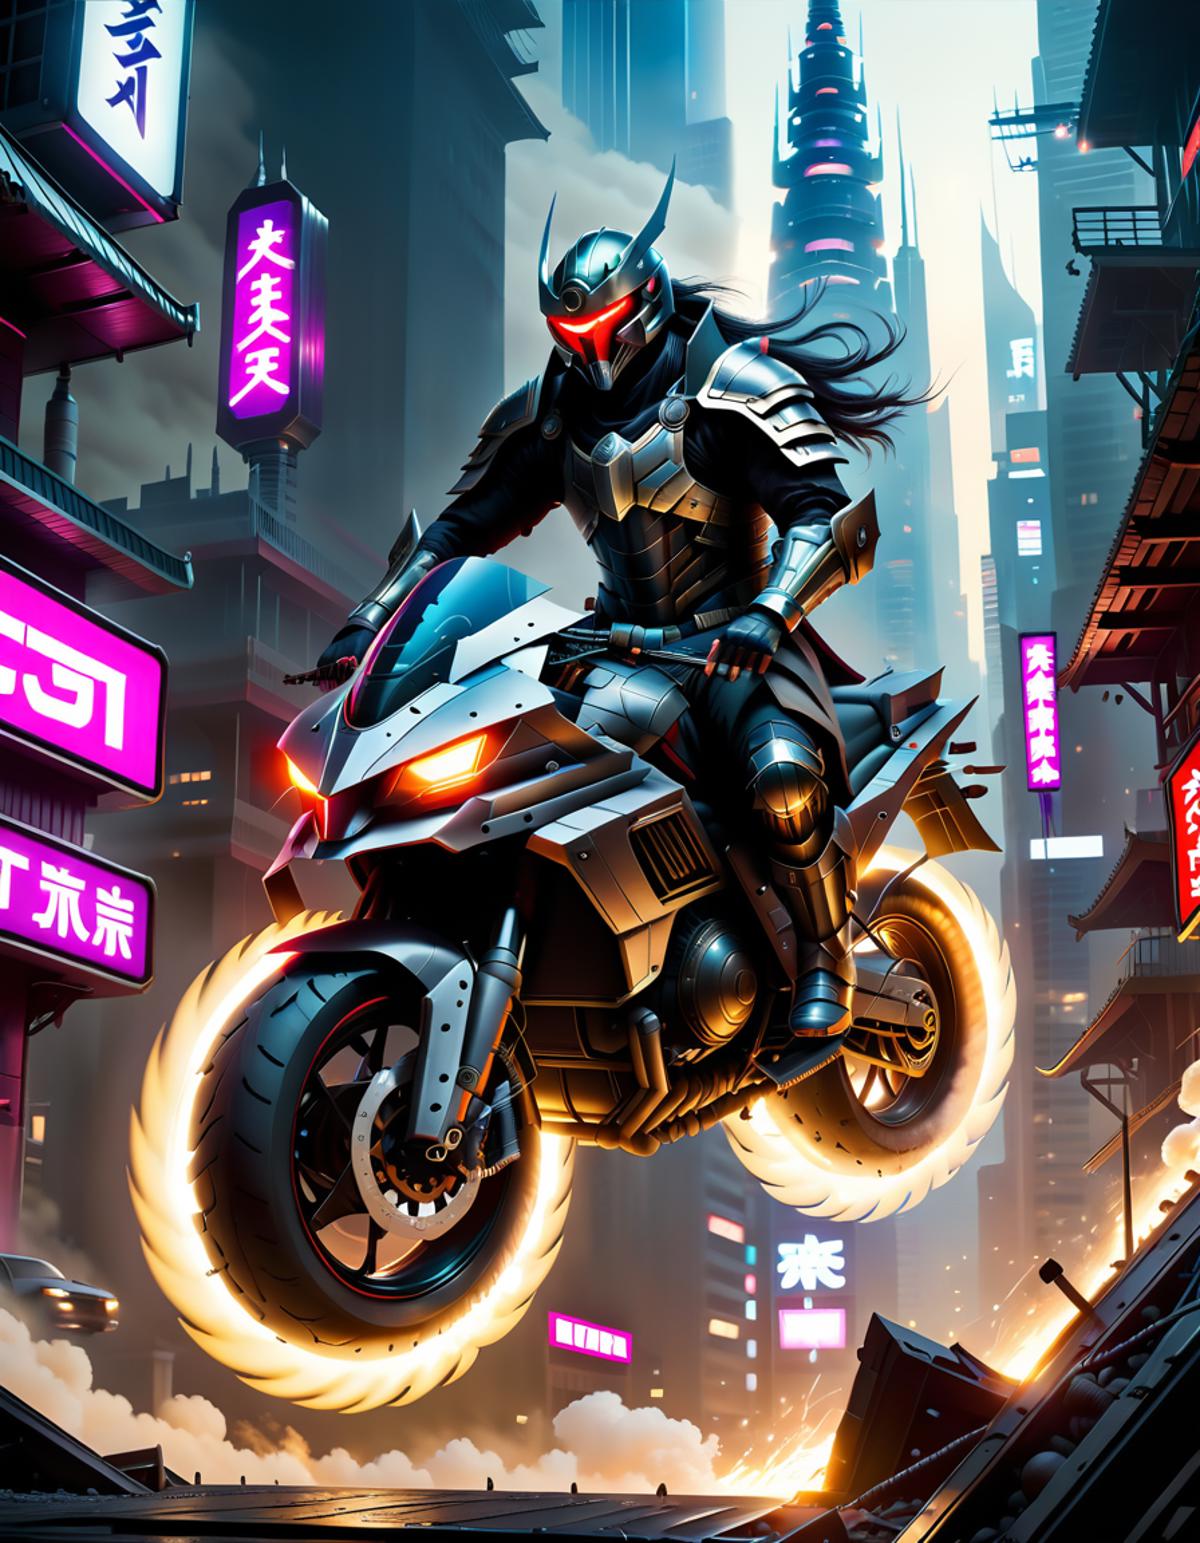 Futuristic Cyberpunk Motorcycle Rider in a Dystopian Cityscape